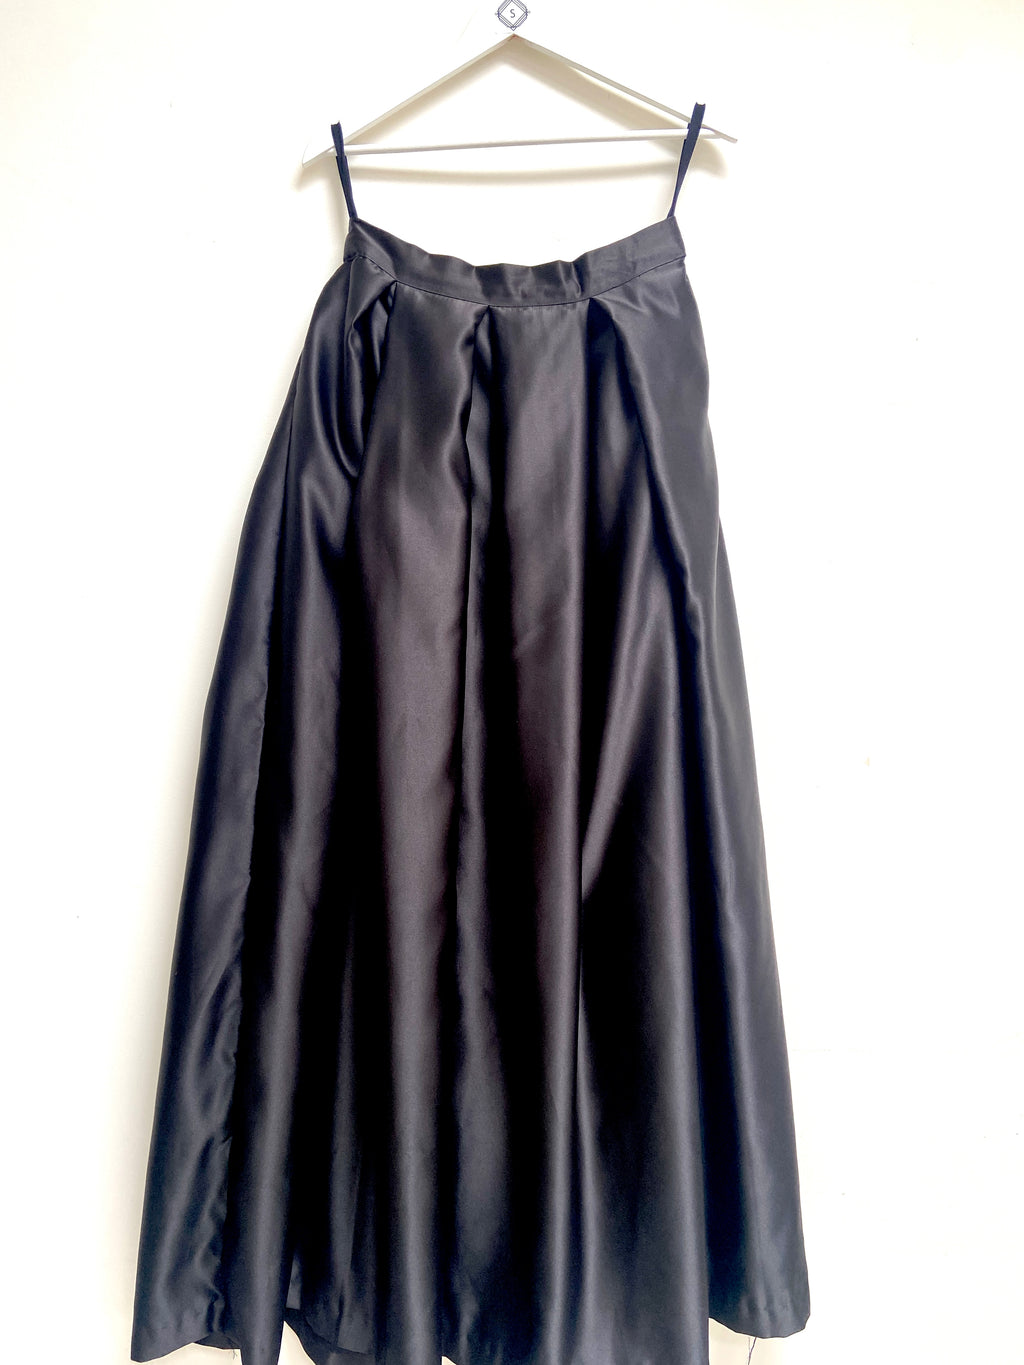 Duchess satin lehenga skirt (black and other colours)